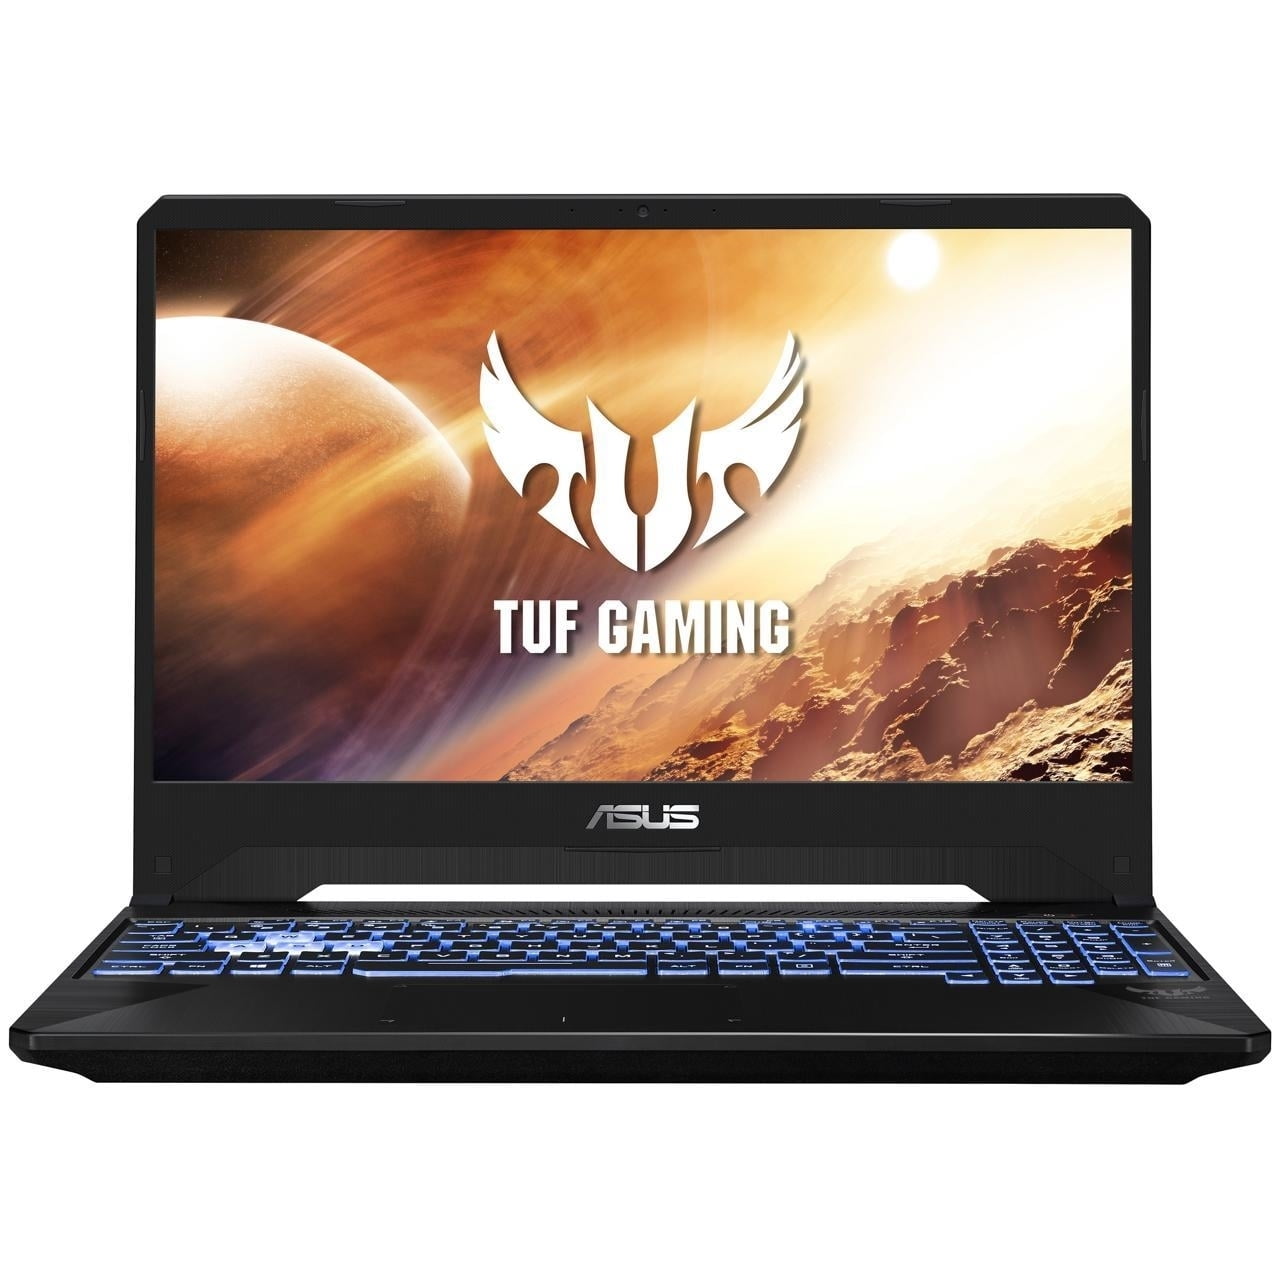 streng strategie Dagelijks ASUS TUF Gaming Laptop, 15.6” 144Hz Full HD IPS-Type Display, Intel Core i7-9750H  Processor, GeForce GTX 1650, 8GB DDR4, 512GB PCIe SSD, Gigabit Wi-Fi 5,  Windows 10 Home, FX505GT-AB73 Notebook - Walmart.com